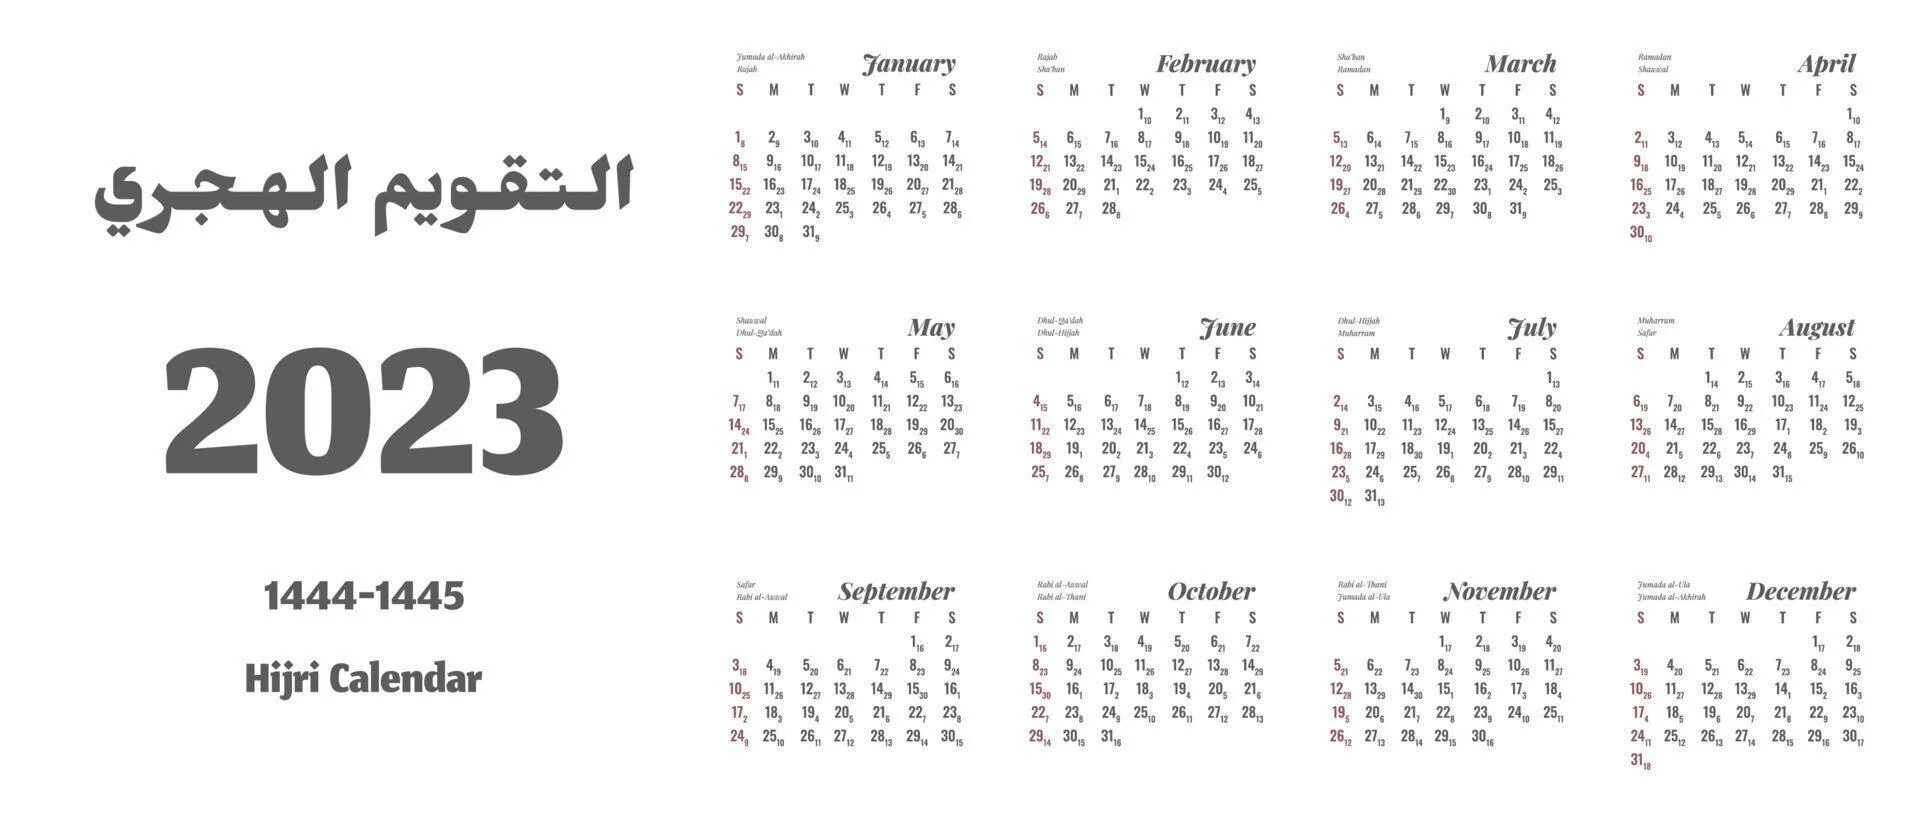 Исламский календарь 2023. Календарь 2023. Календарь на 2023 год. Календарь Ислама. Hijri Calendar.